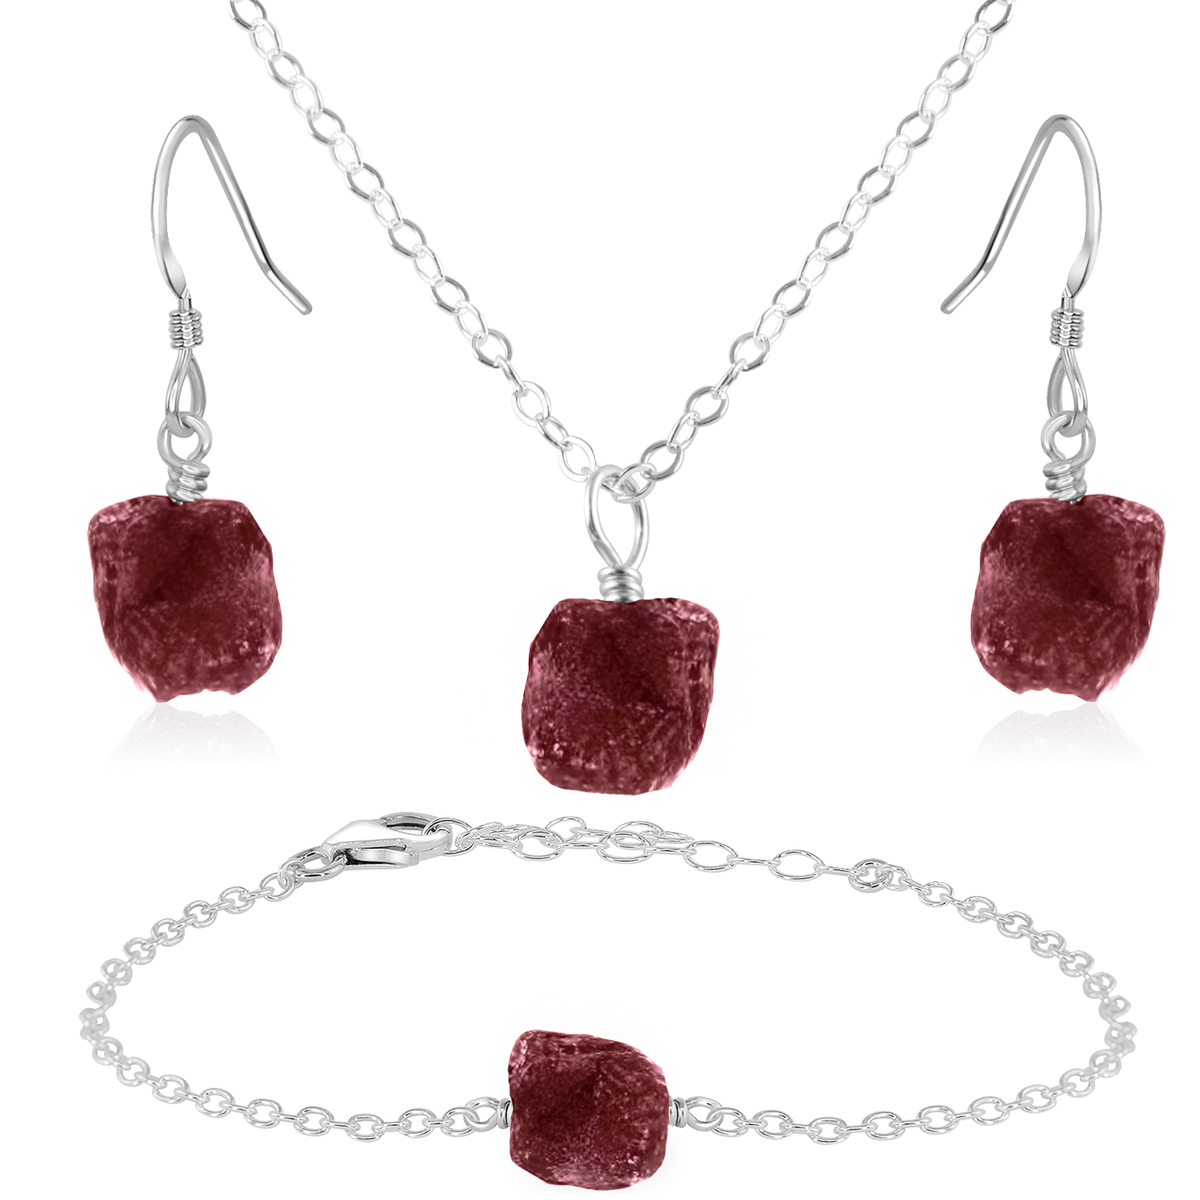 Raw Ruby Crystal Jewellery Set - Raw Ruby Crystal Jewellery Set - Sterling Silver / Cable / Necklace & Earrings & Bracelet - Luna Tide Handmade Crystal Jewellery